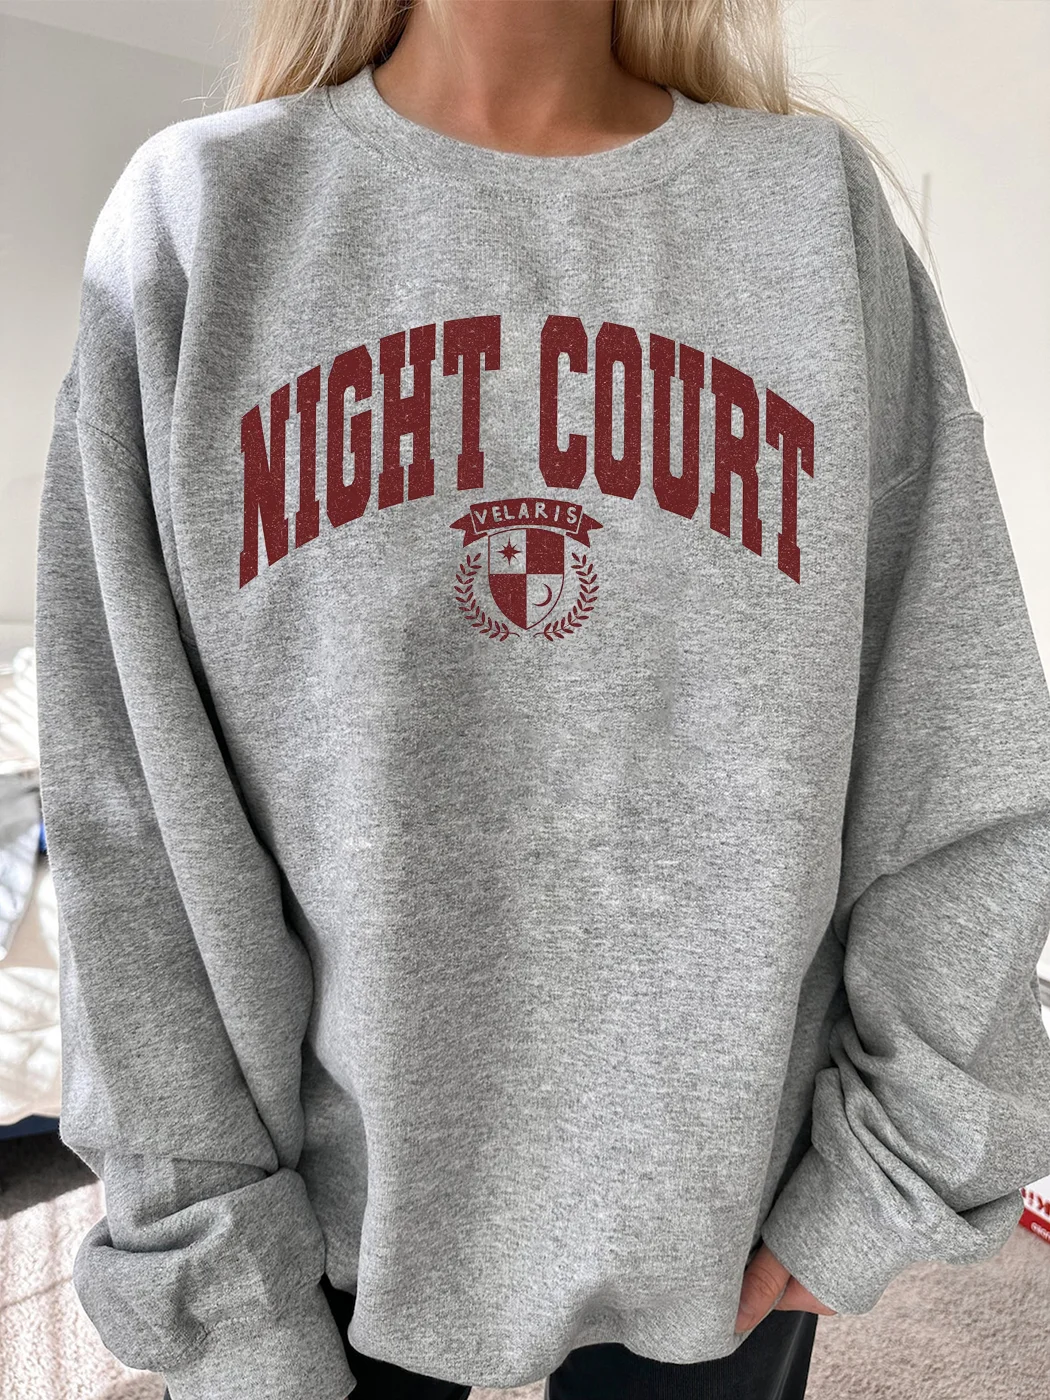 The Night Court Sweatshirt, Velaris Sweatshirt / DarkAcademias /Darkacademias